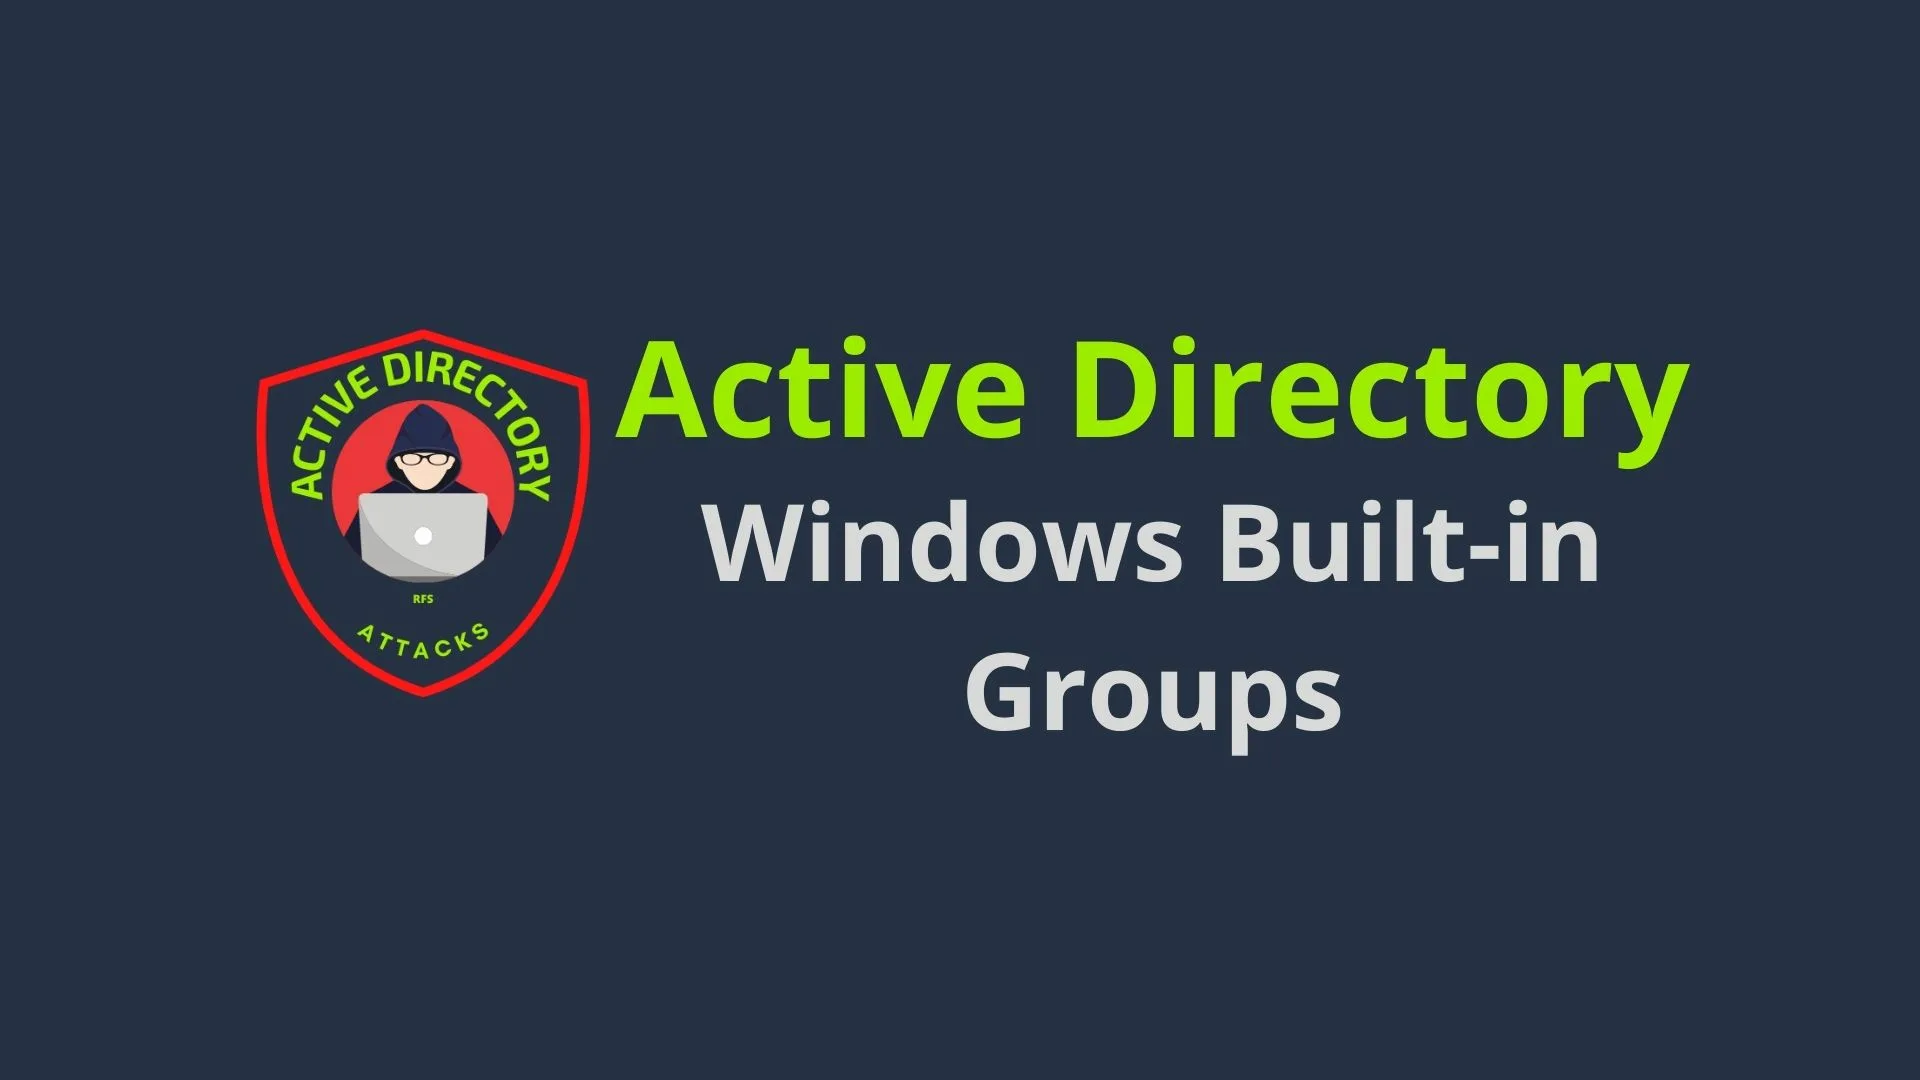 Windows Built-in Groups